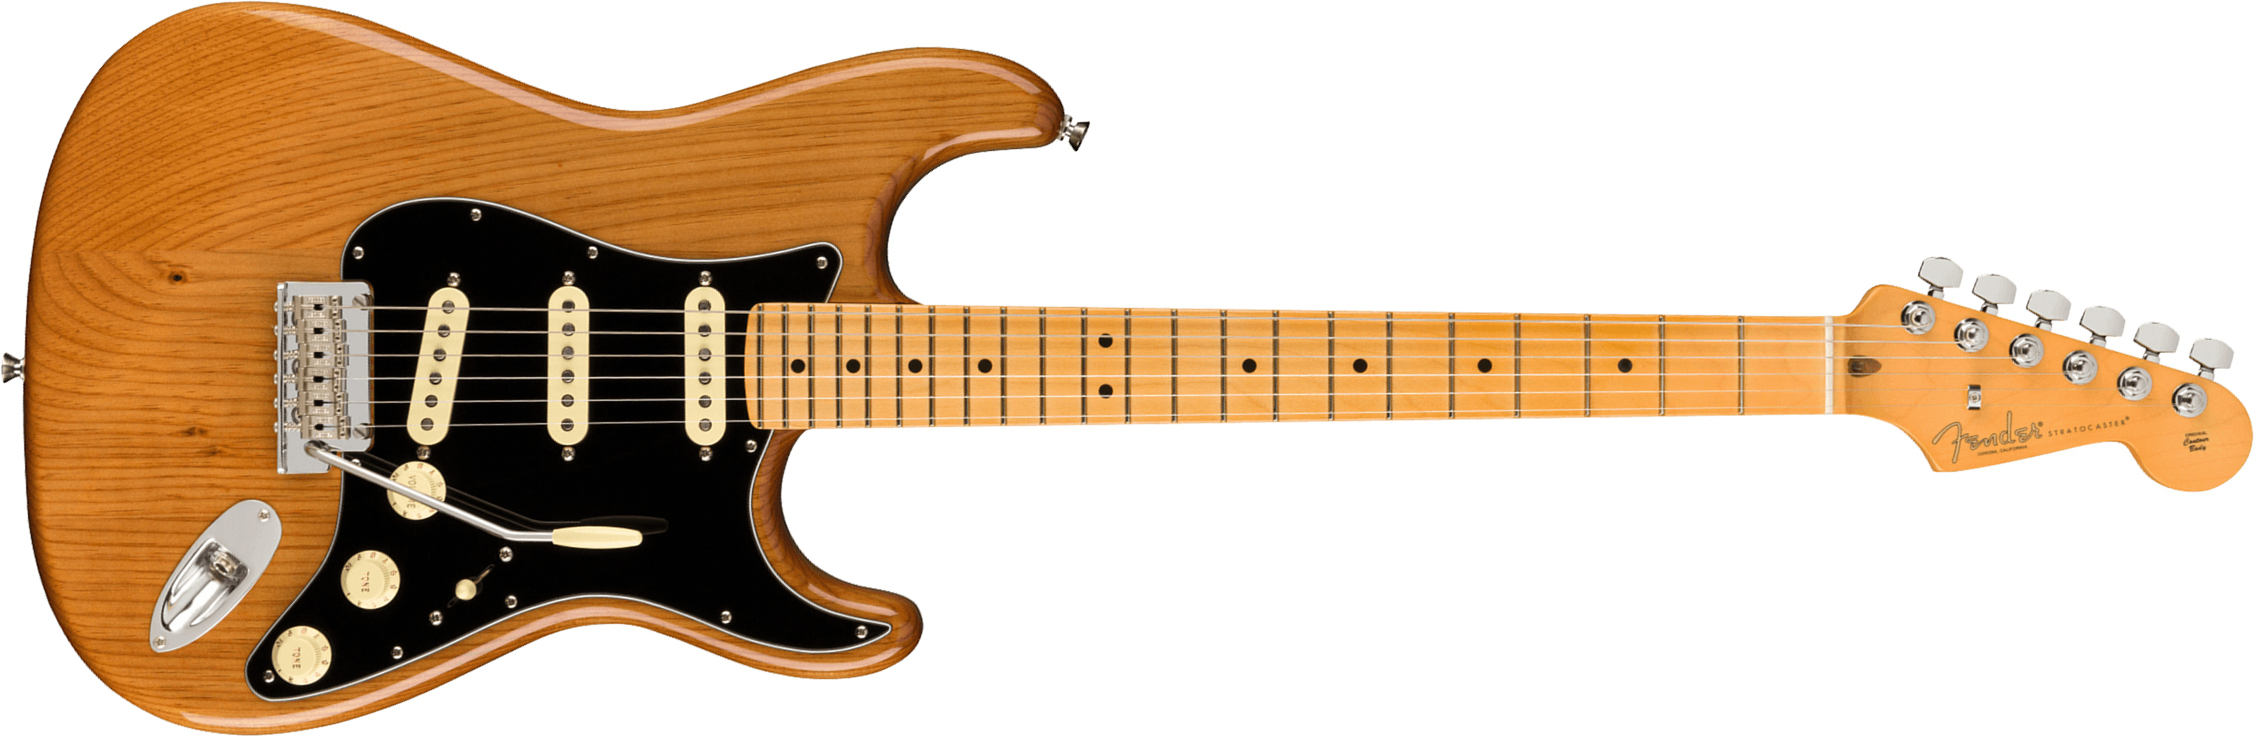 Fender Strat American Professional Ii Usa Mn - Roasted Pine - Elektrische gitaar in Str-vorm - Main picture